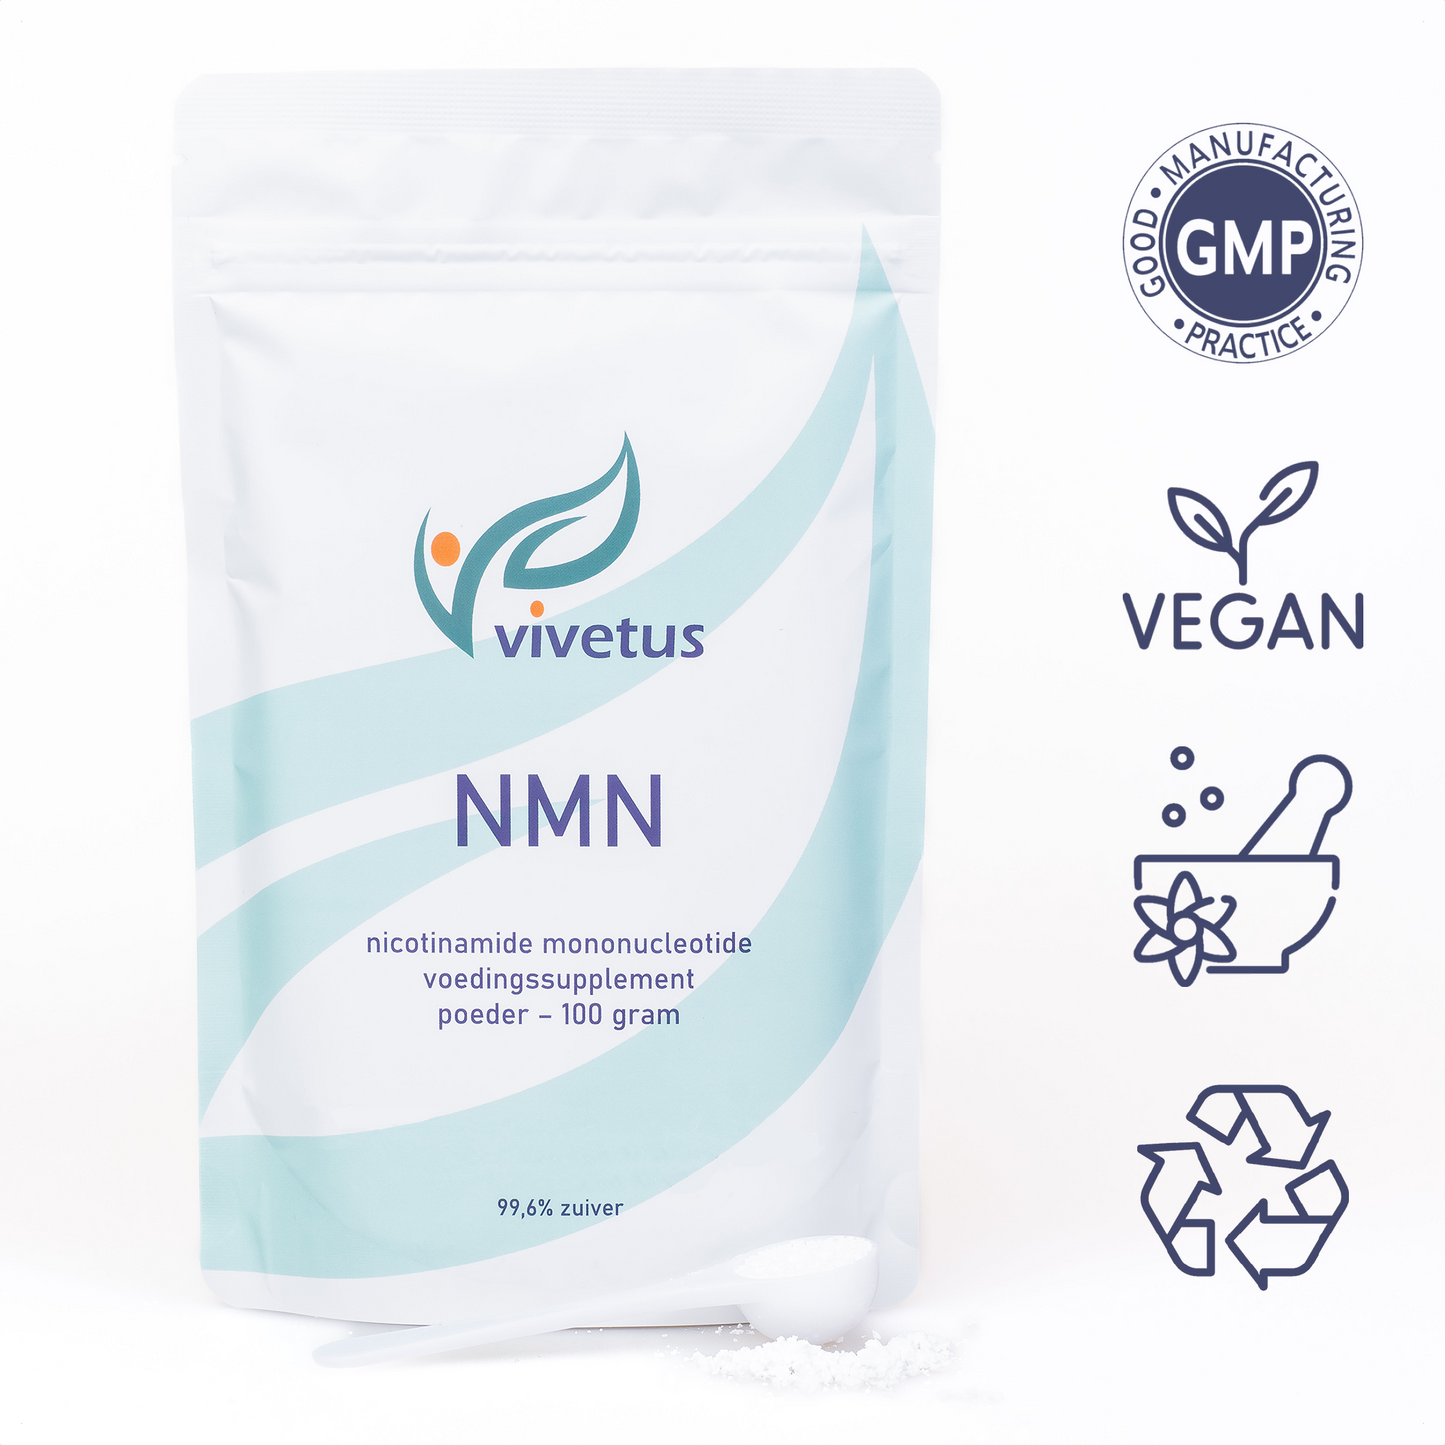 Vivetus NMN powder